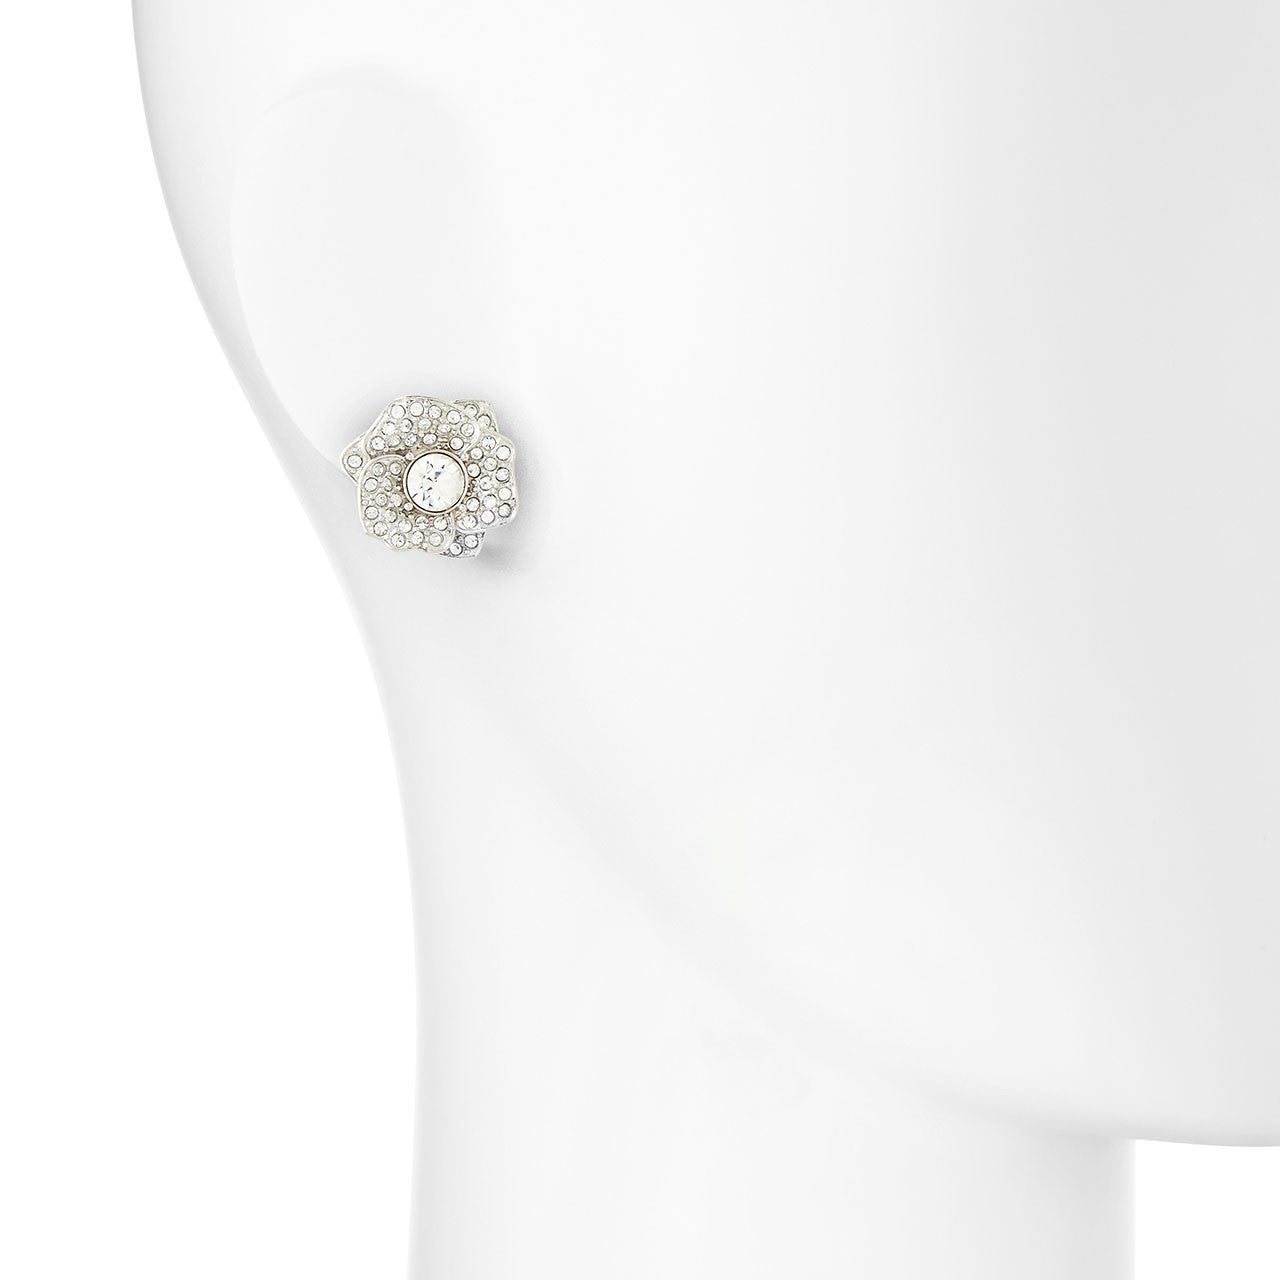 Kate Spade Crystal Flower Earring on model